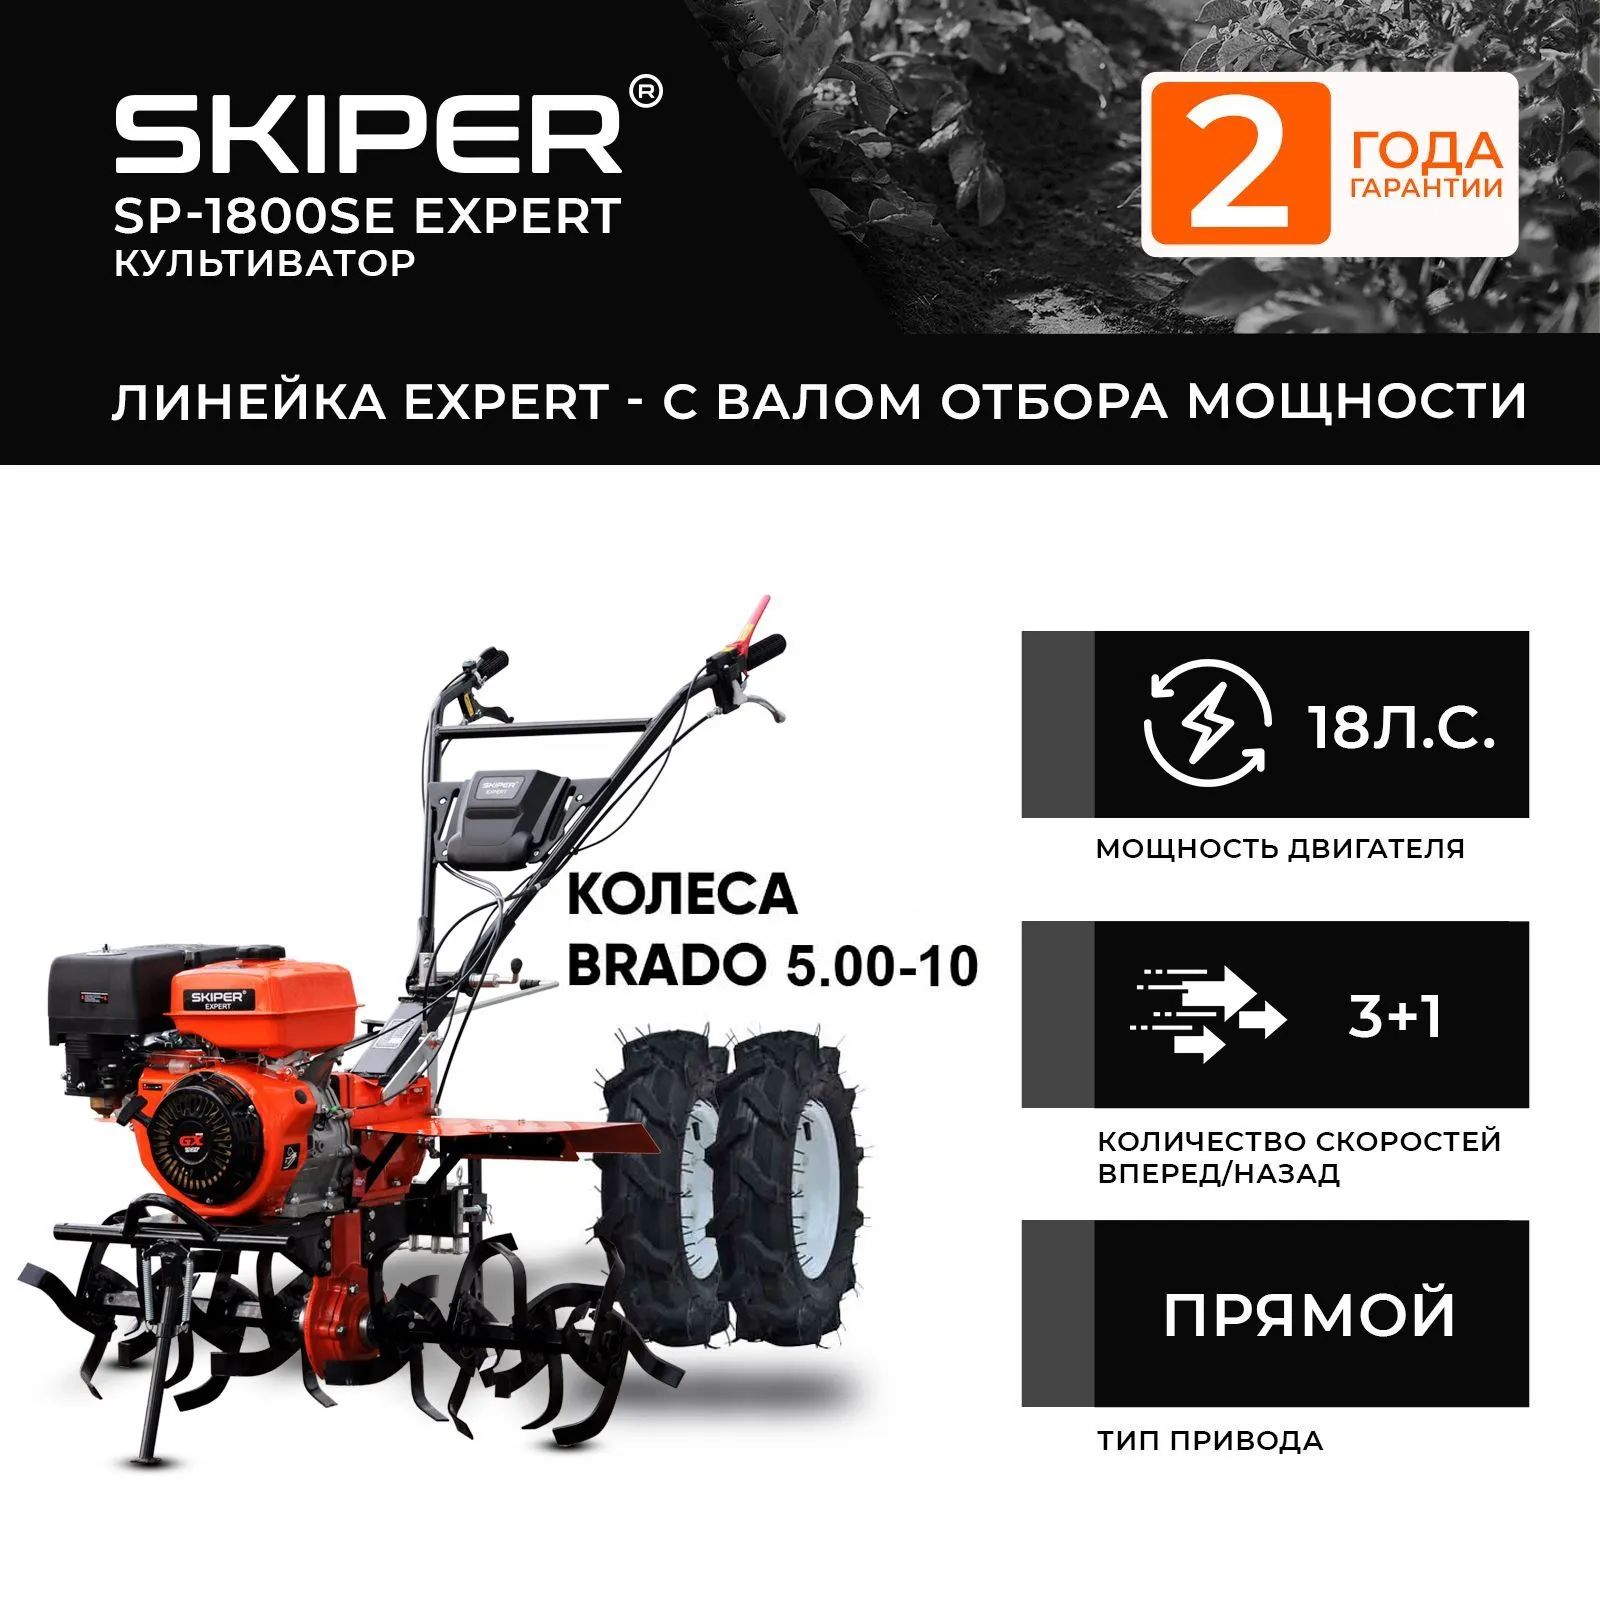 Skiper SP-1800SE EXPERT + колеса Brado 5.00-10 (2000290790023)